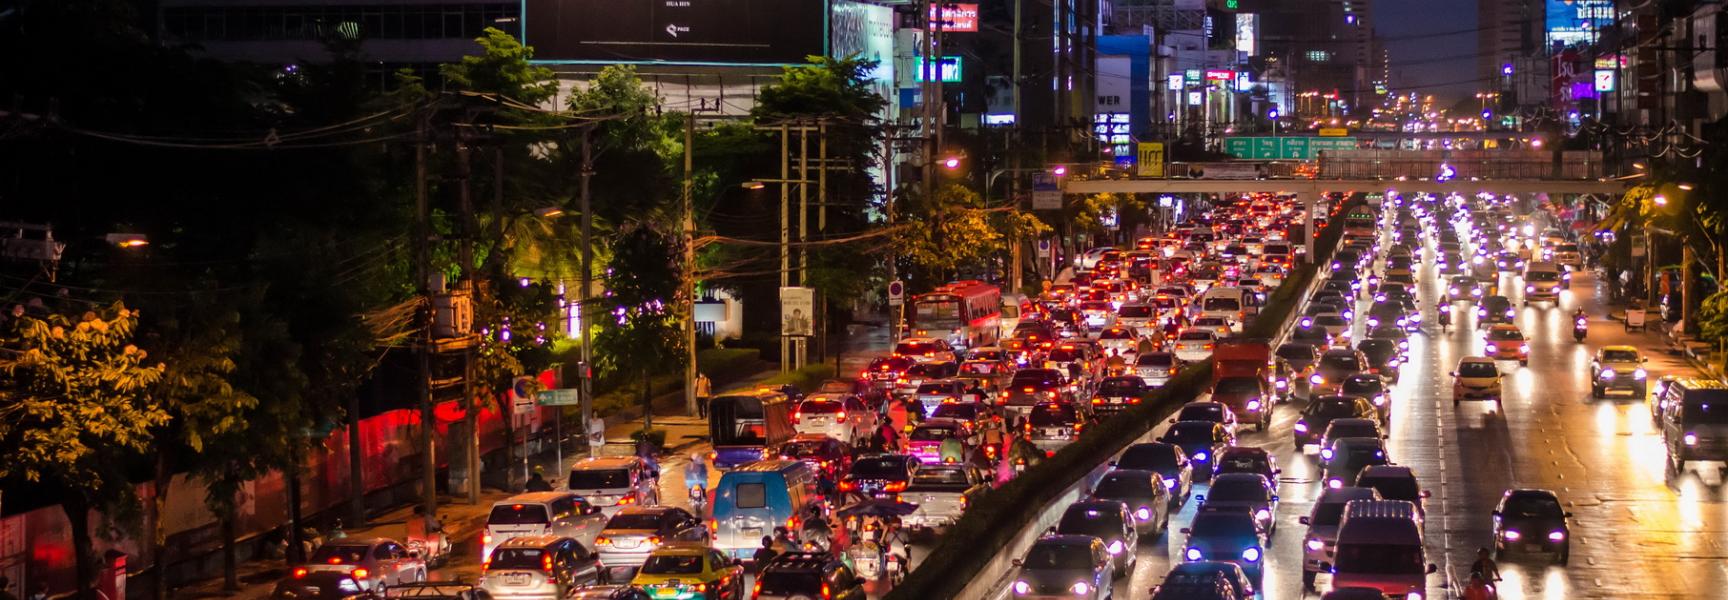 Embouteillages à Bangkok, 2013